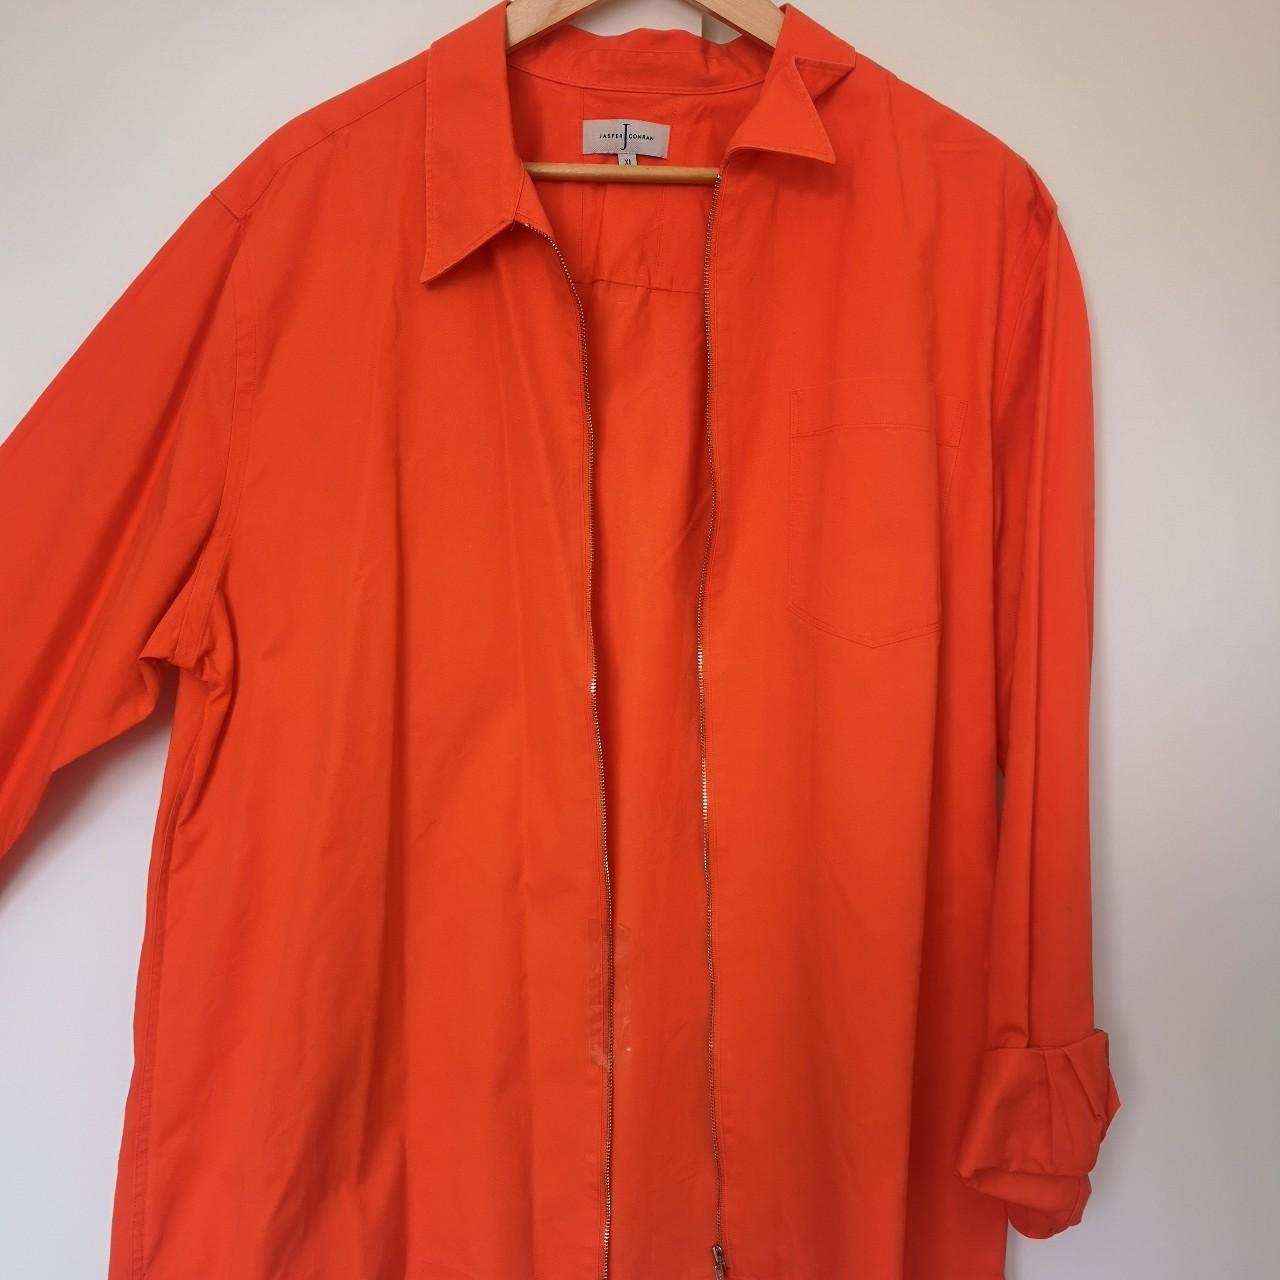 Jasper conran orange jacket #orange #jacket... - Depop